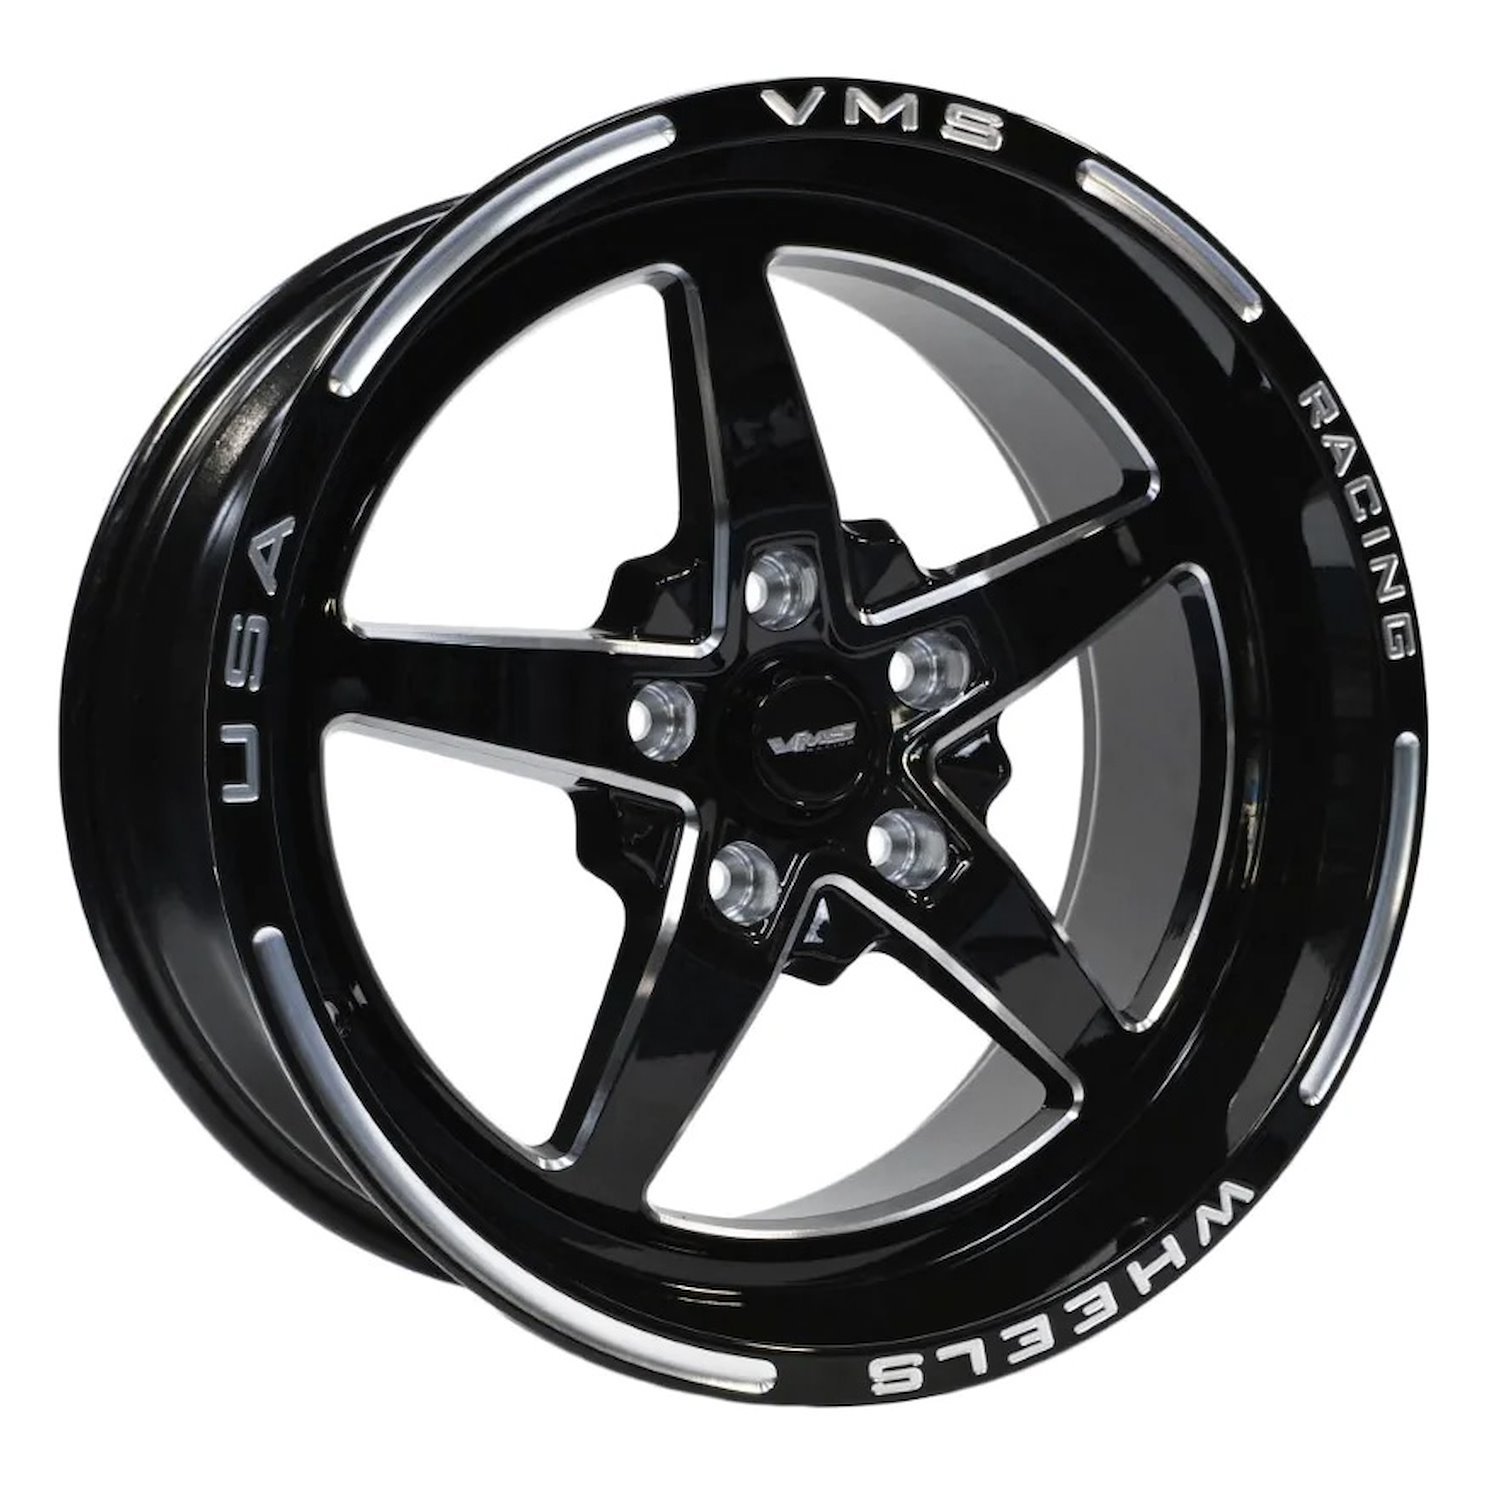 VWST009 V-Star Wheel, Size: 17" x 8", Bolt Pattern: 5 x 4 1/2" (114.3 mm) [Finish: Gloss Black Milled]